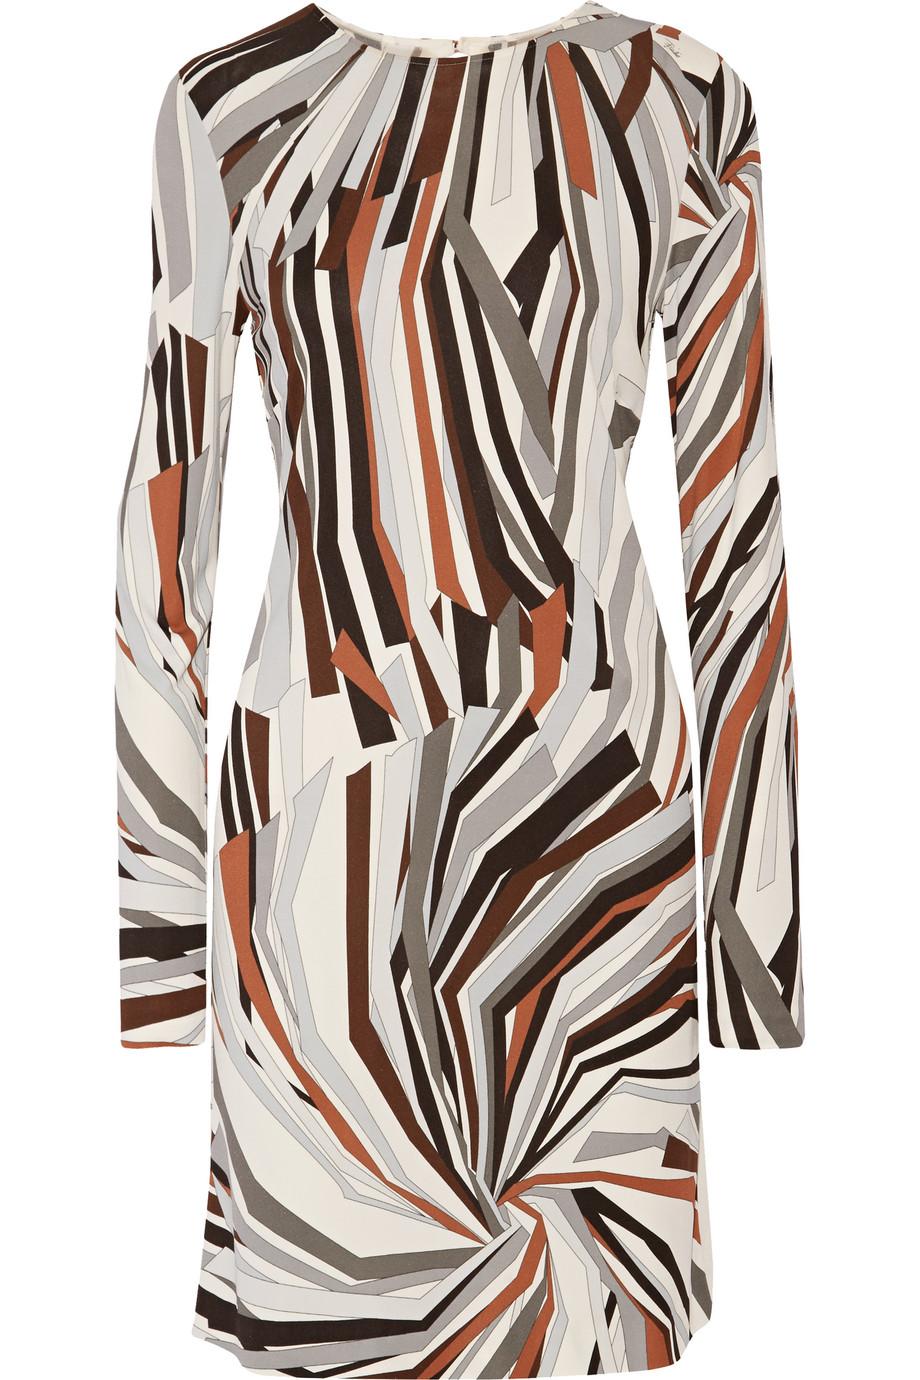 Emilio Pucci Printed Stretch-jersey Dress | ModeSens